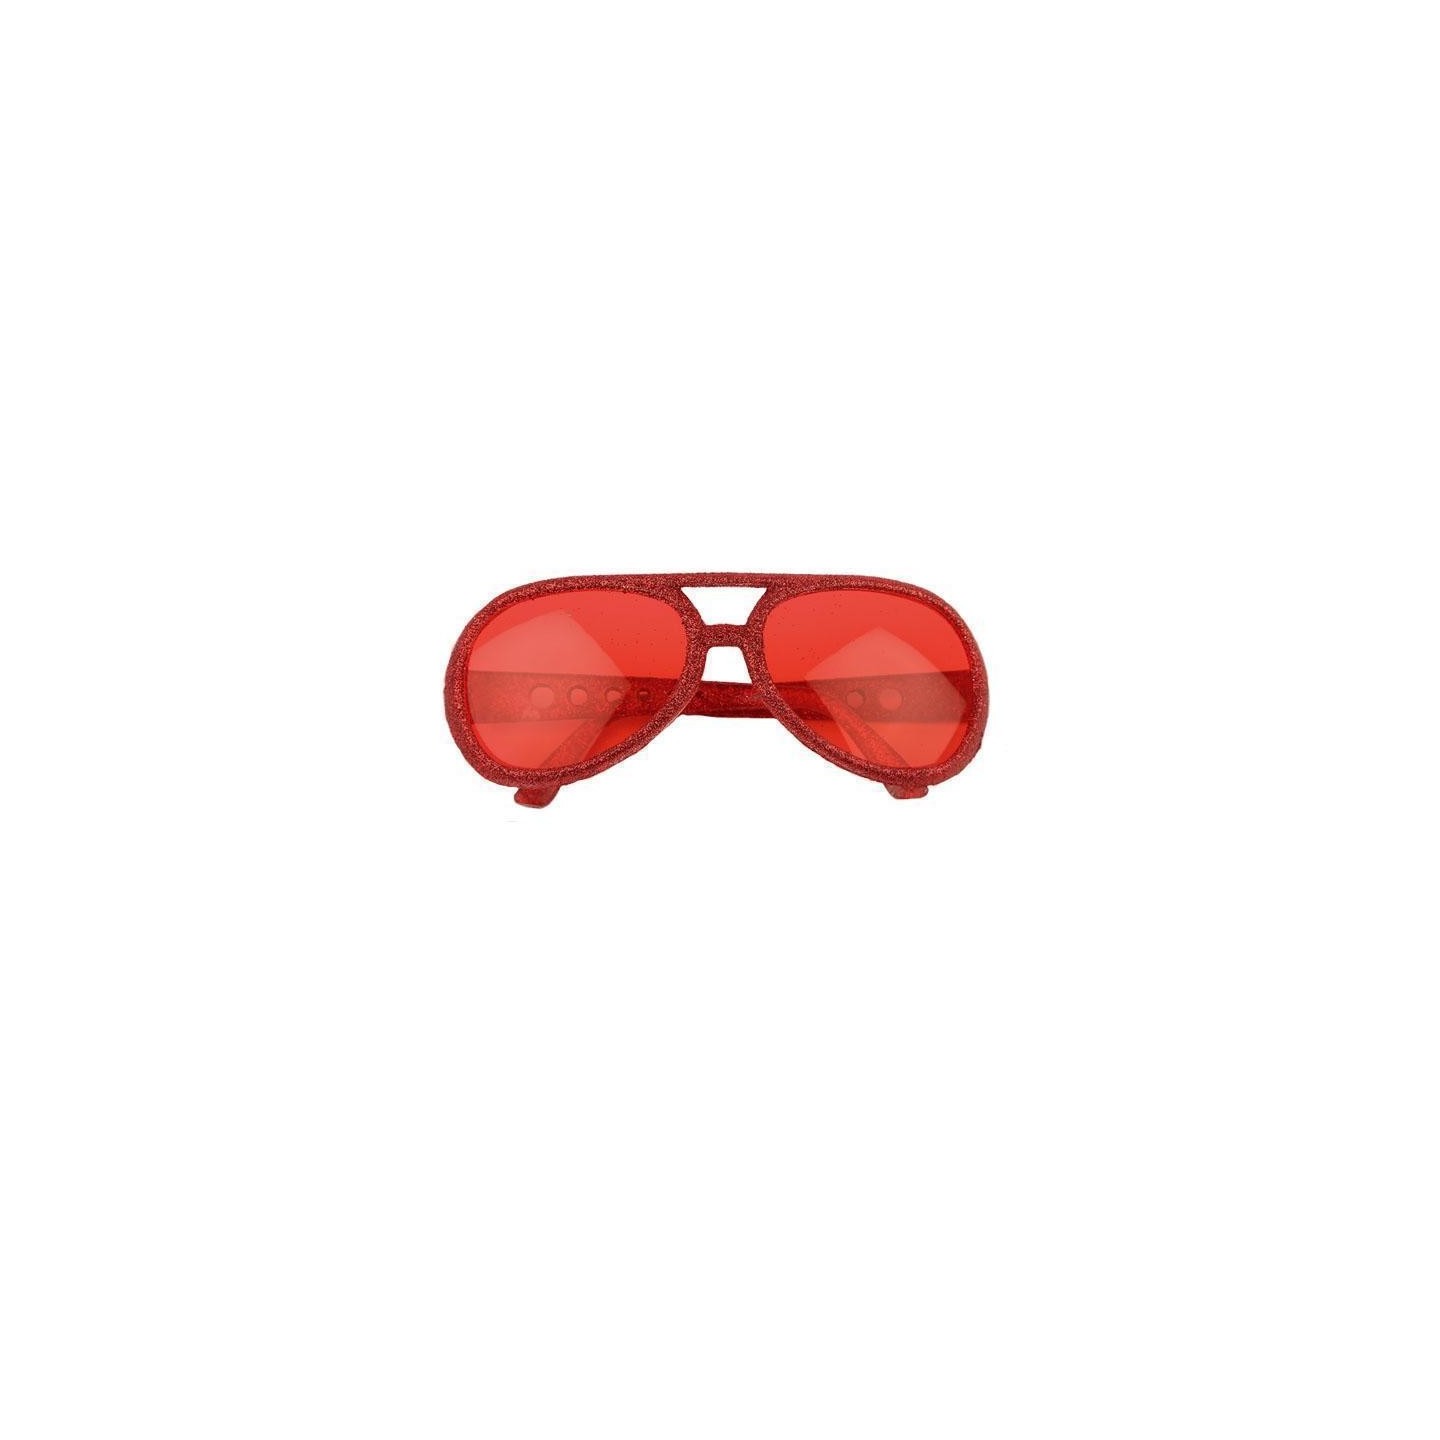 rode disco bril glitter feestbril partybril